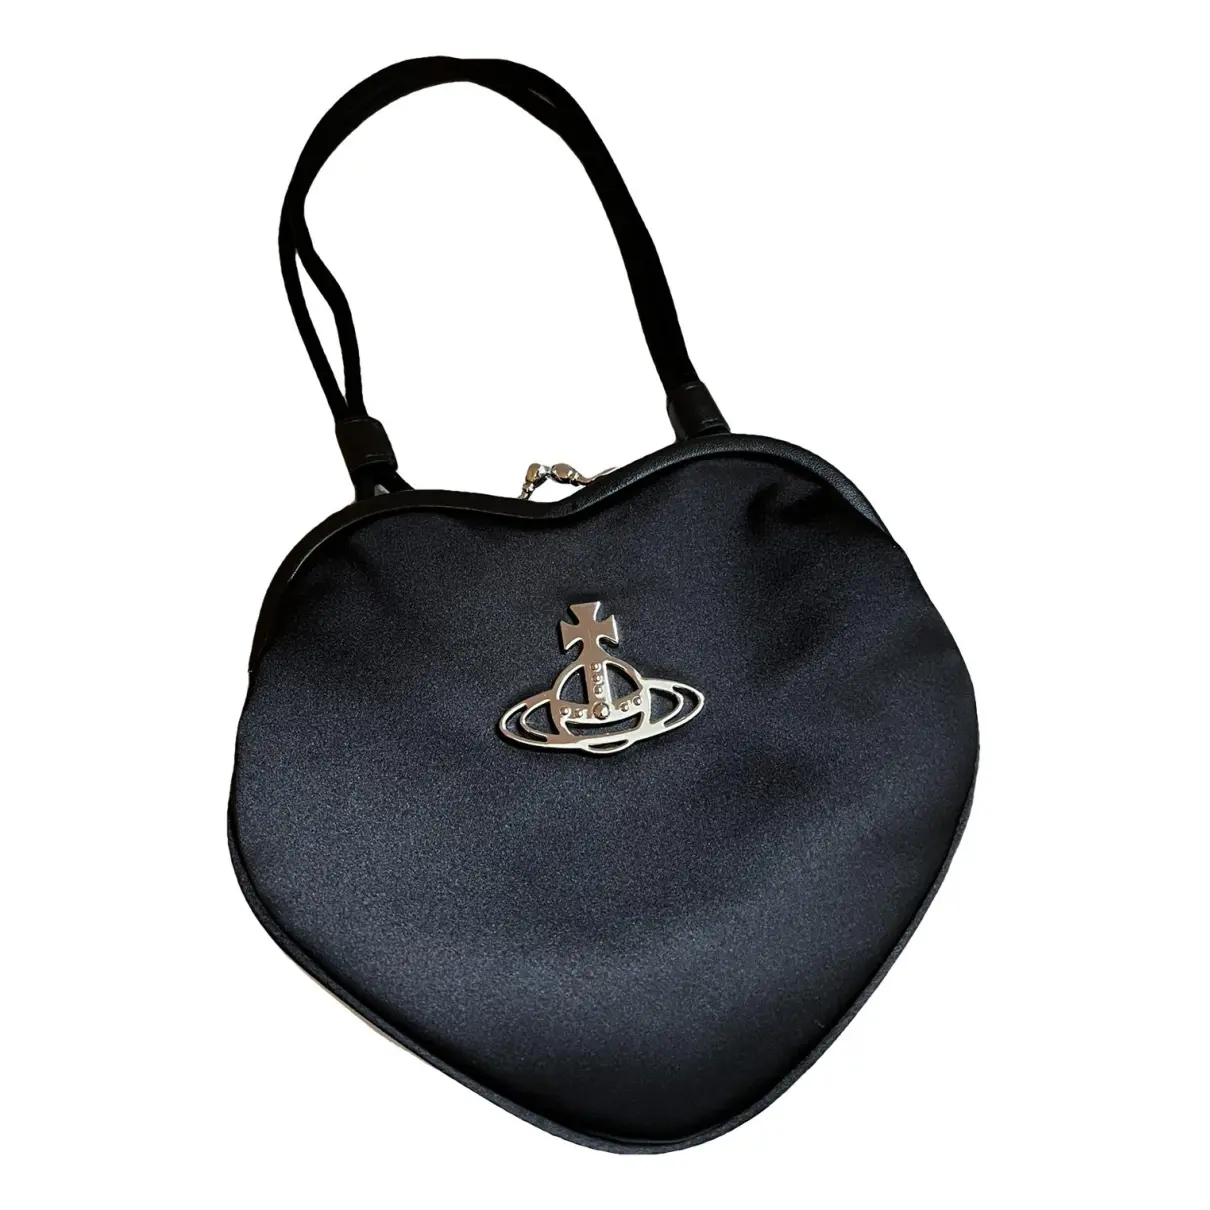 Chancery Heart handbag